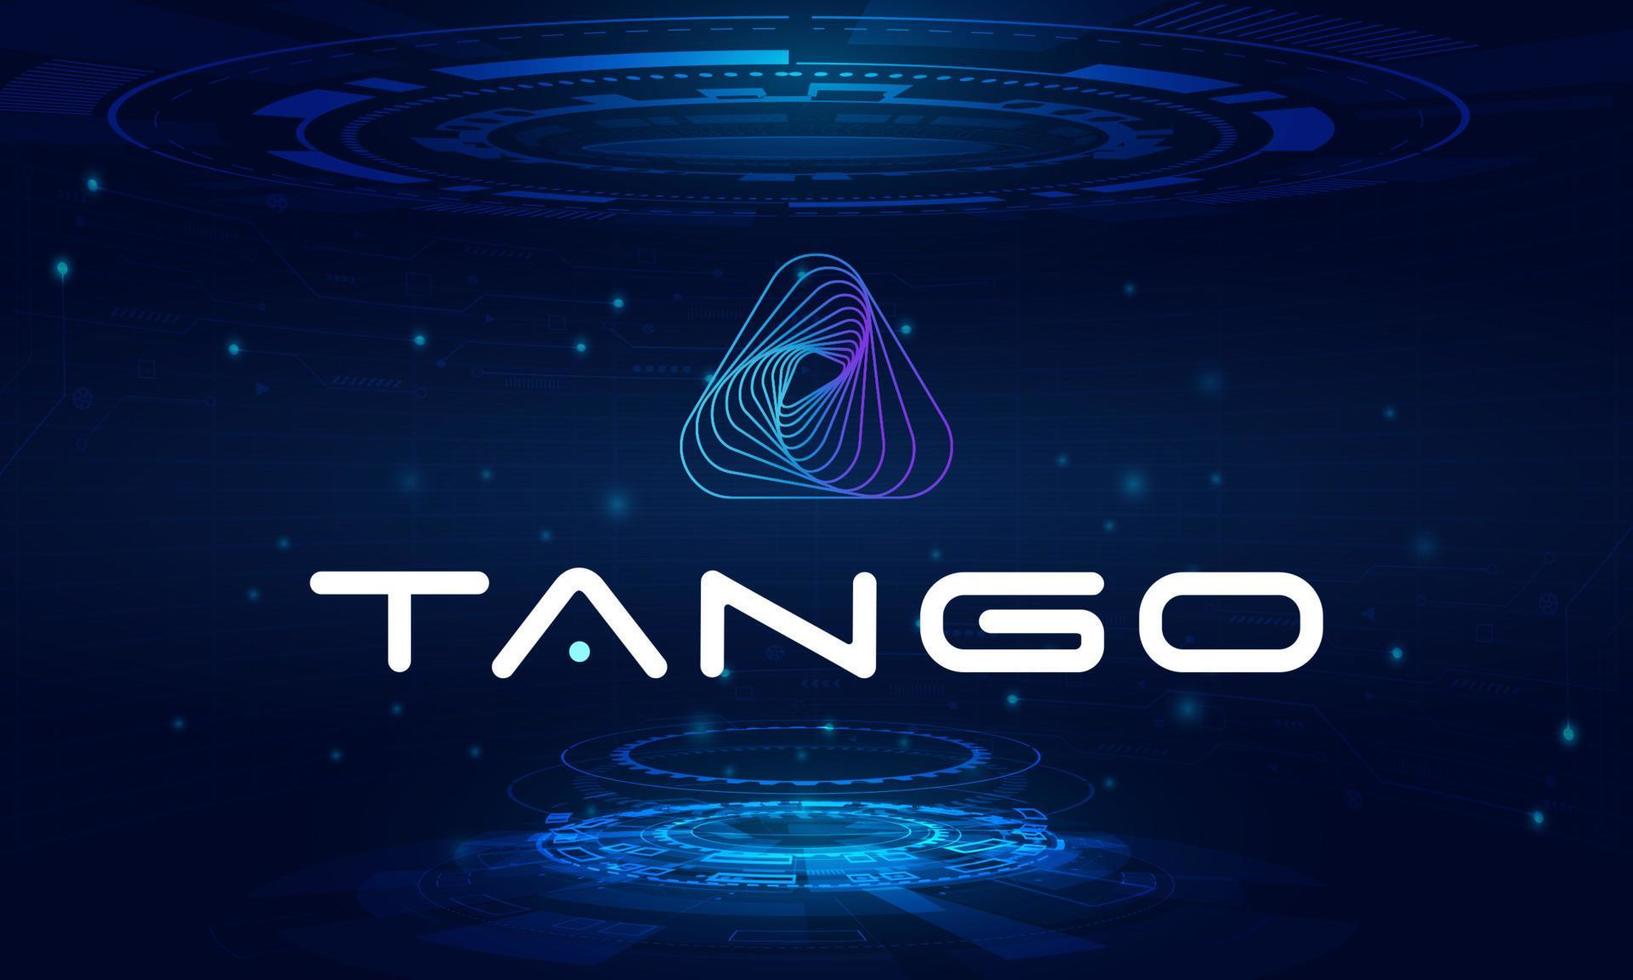 tango chain logo symbol.nft jogo platform.hologram background.world criptomoeda. vetor